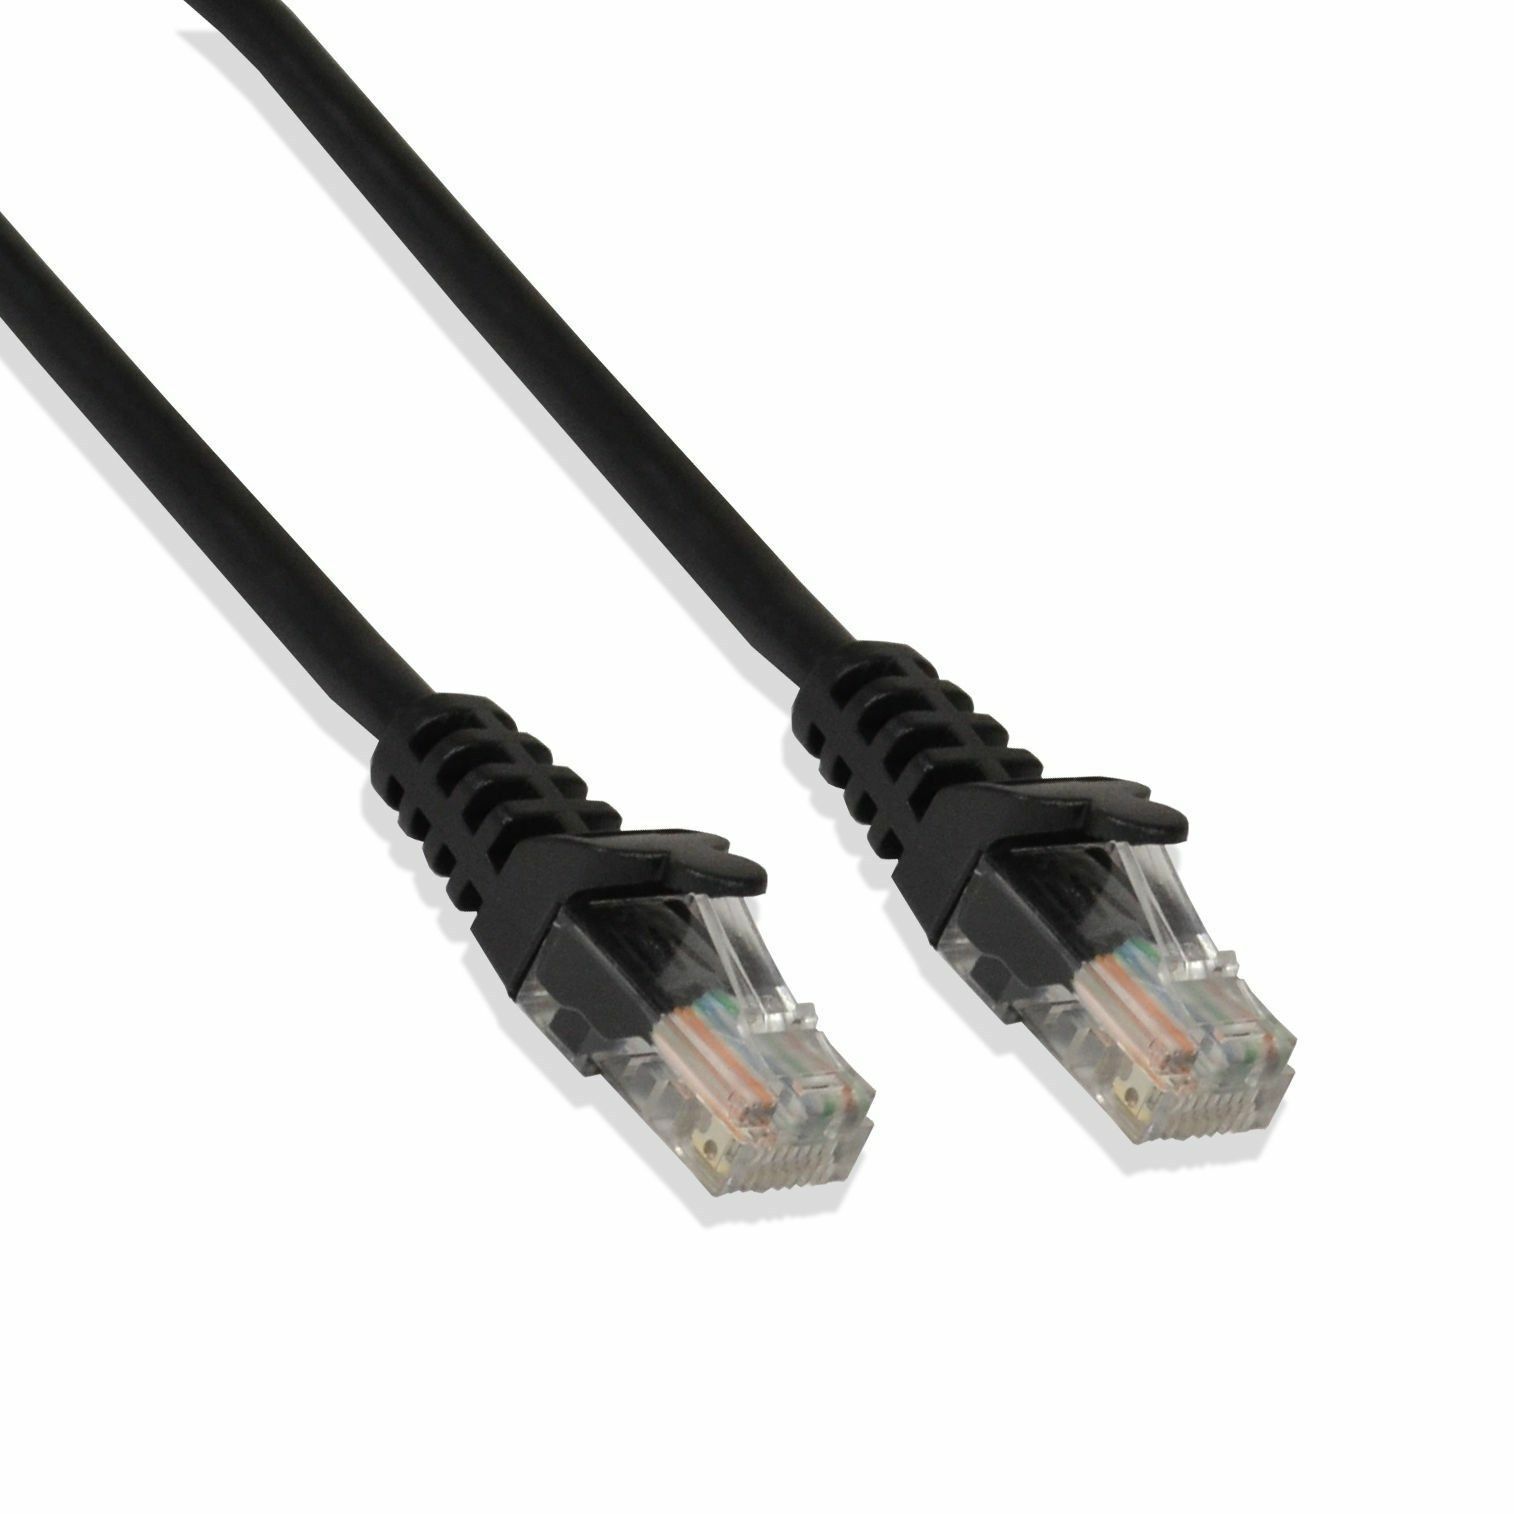 7ft Cat6 Cable Ethernet Lan Network RJ45 Patch Cord Internet Black (50 Pack)